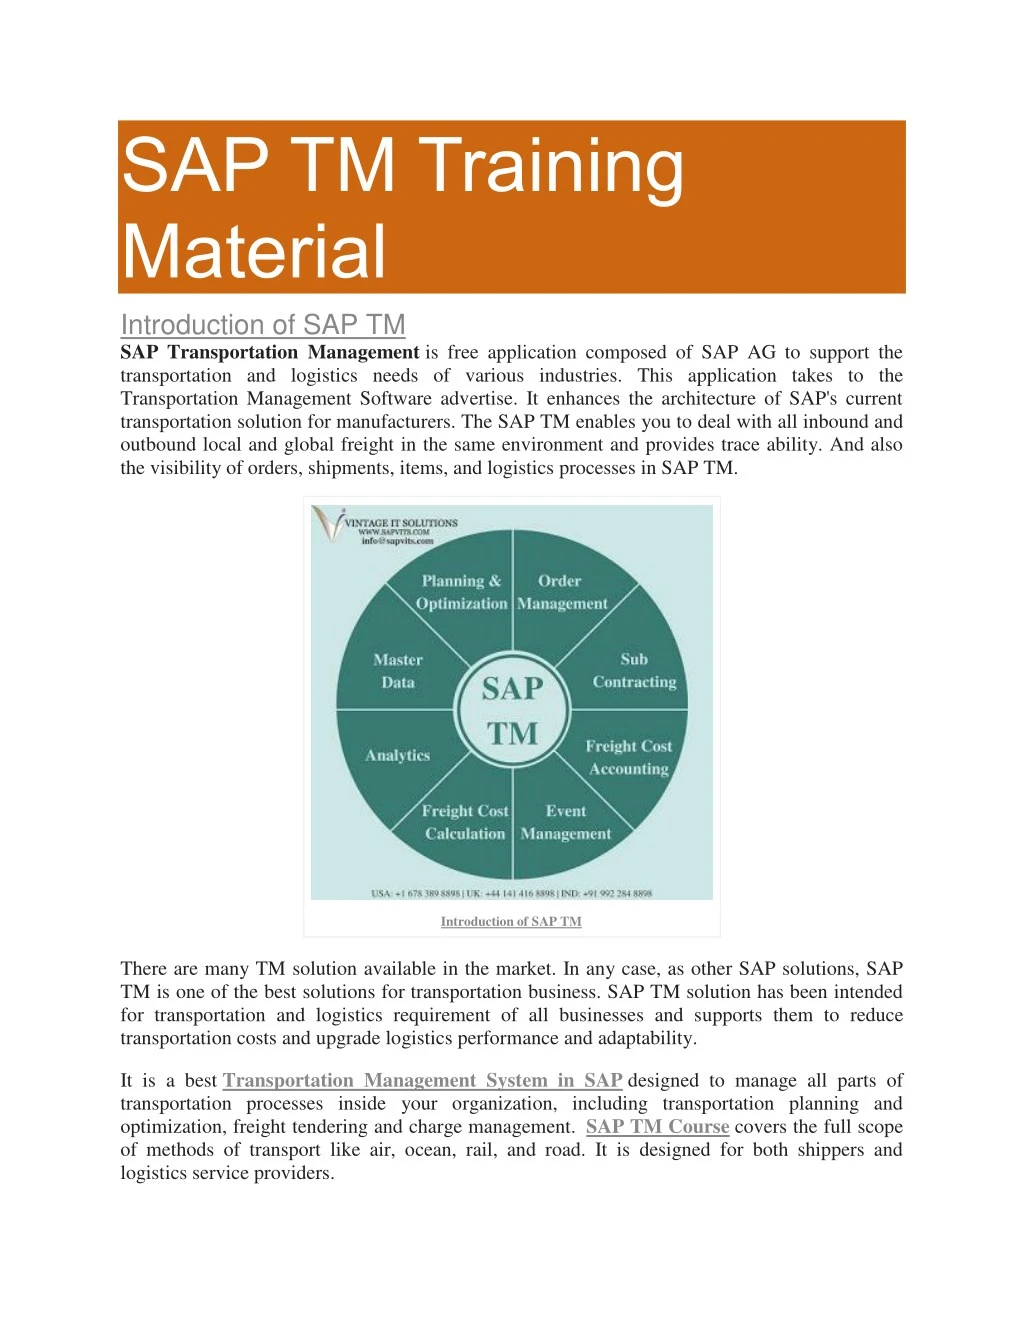 sap tm training material introduction